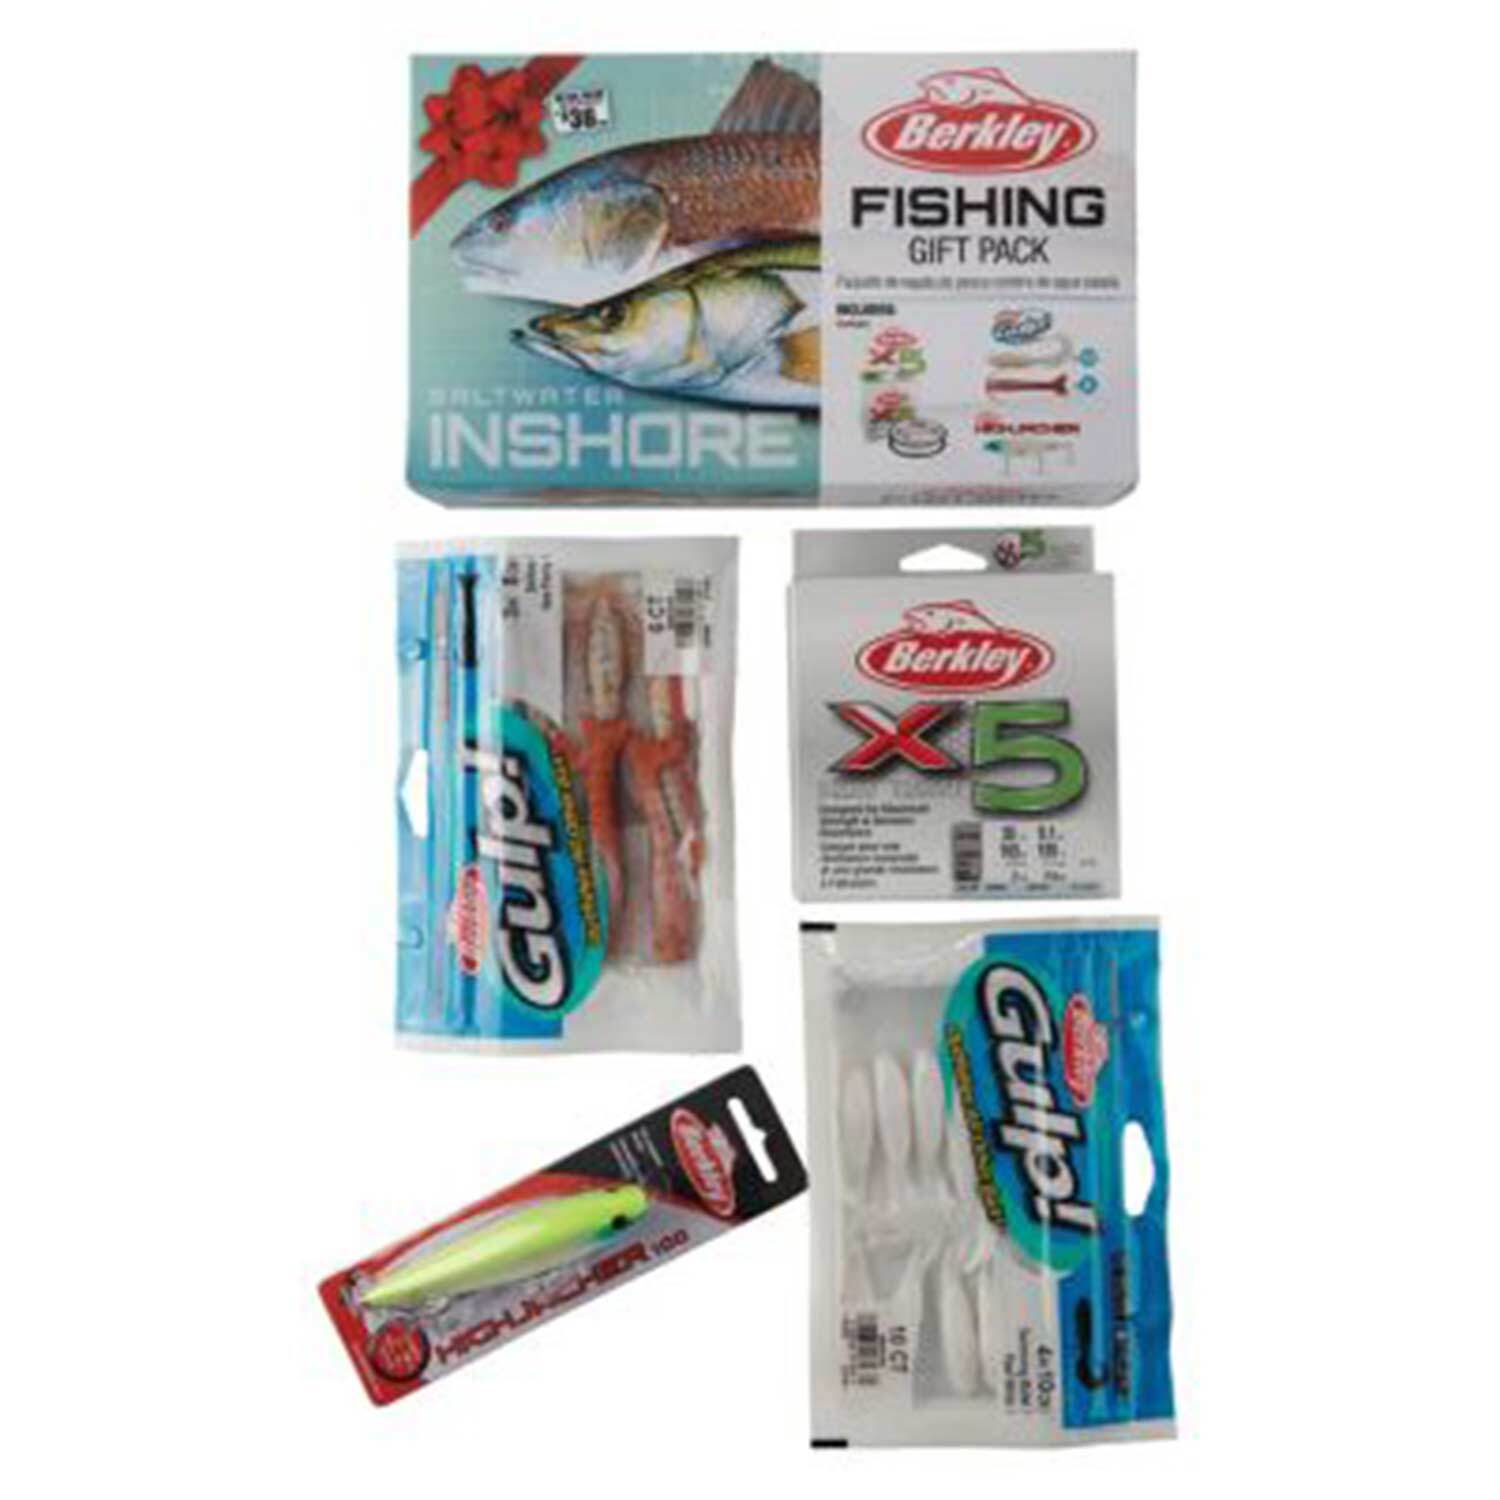 Inshore Fishing Gift Pack